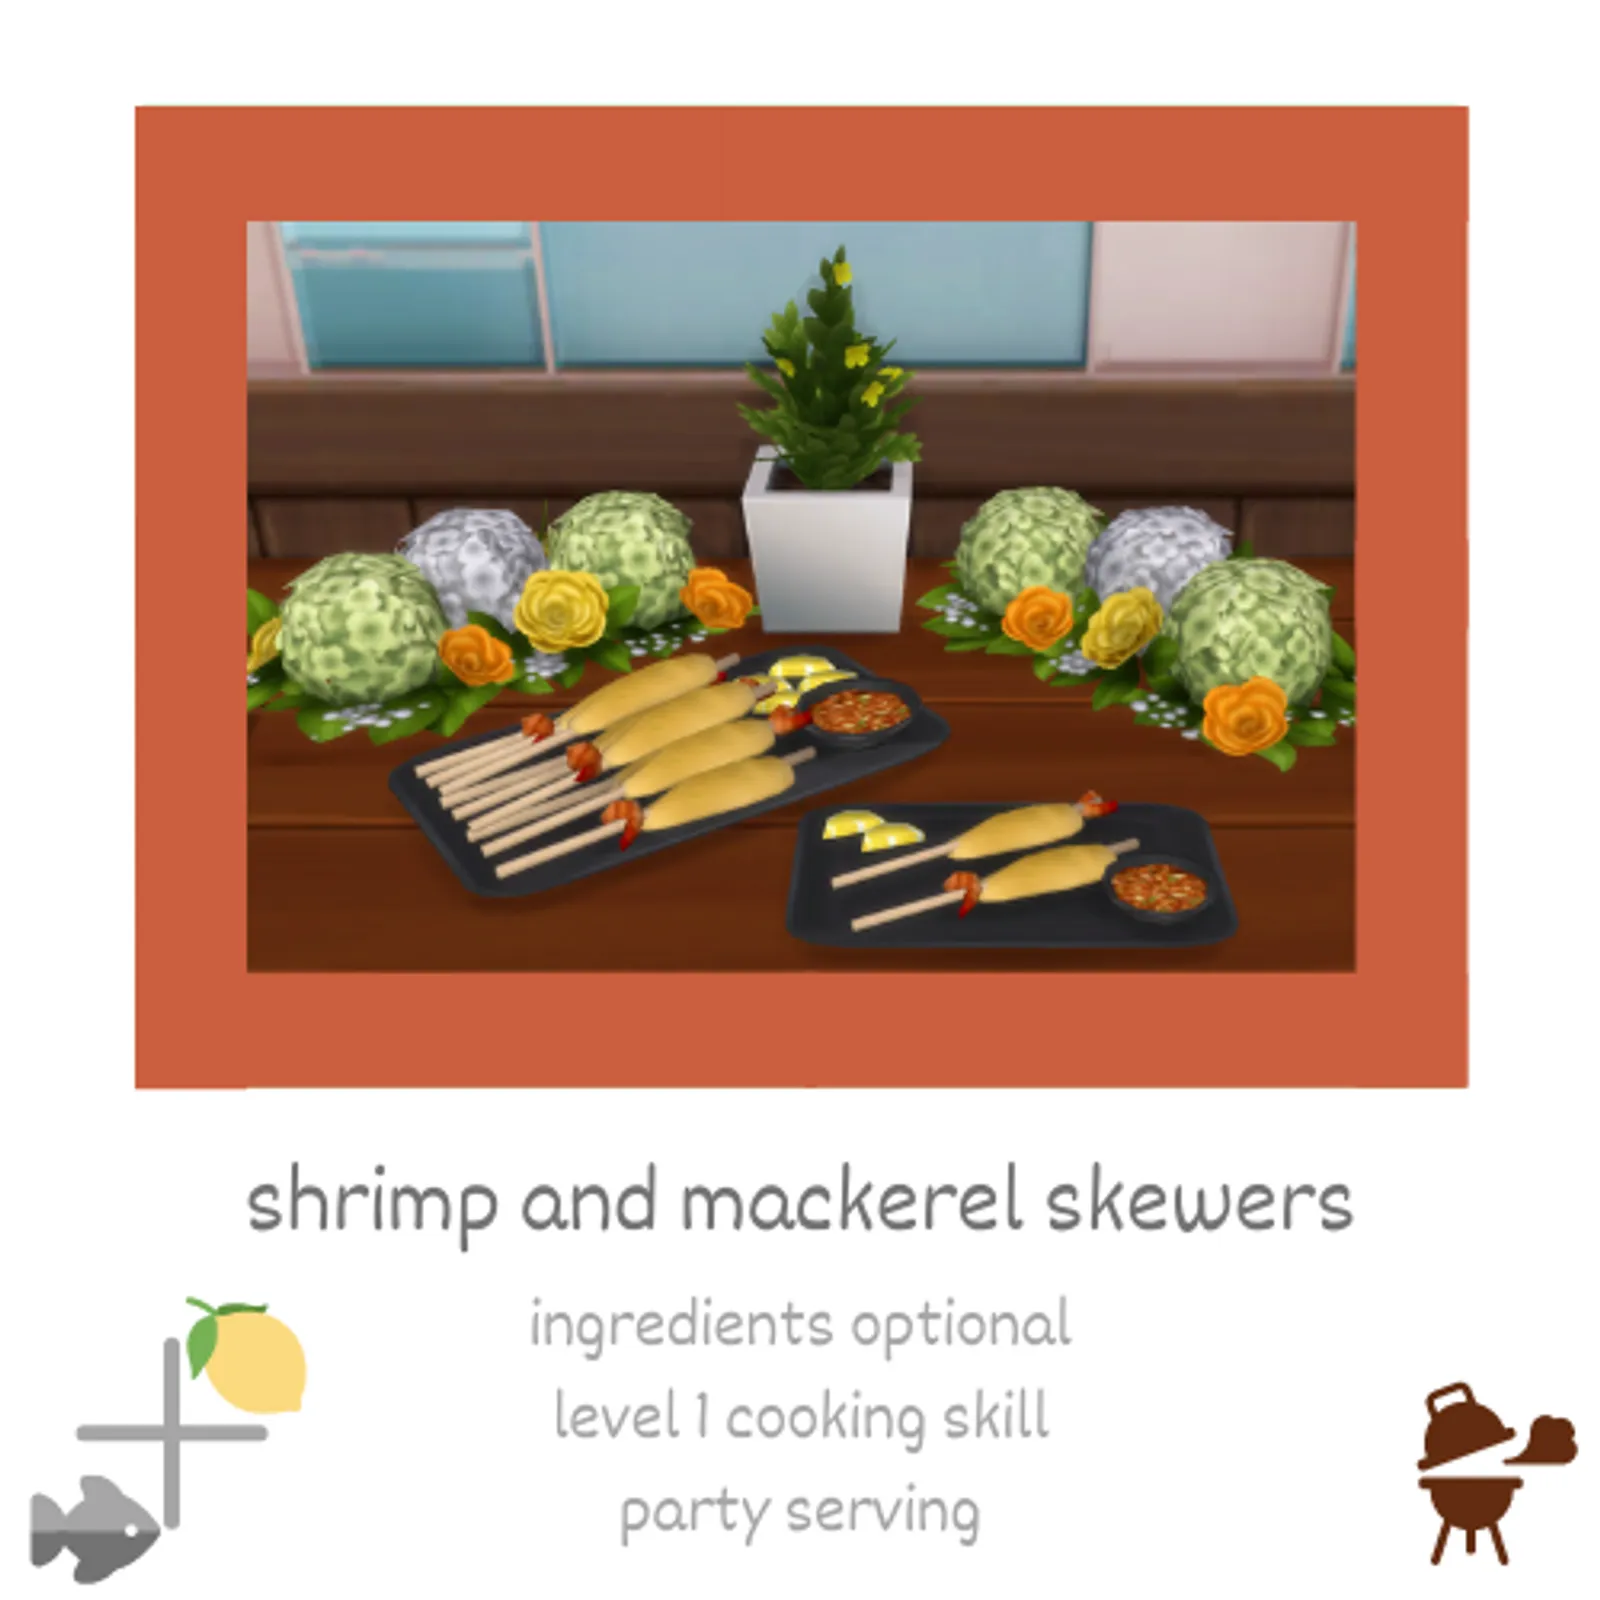 shrimp and mackerel skewers